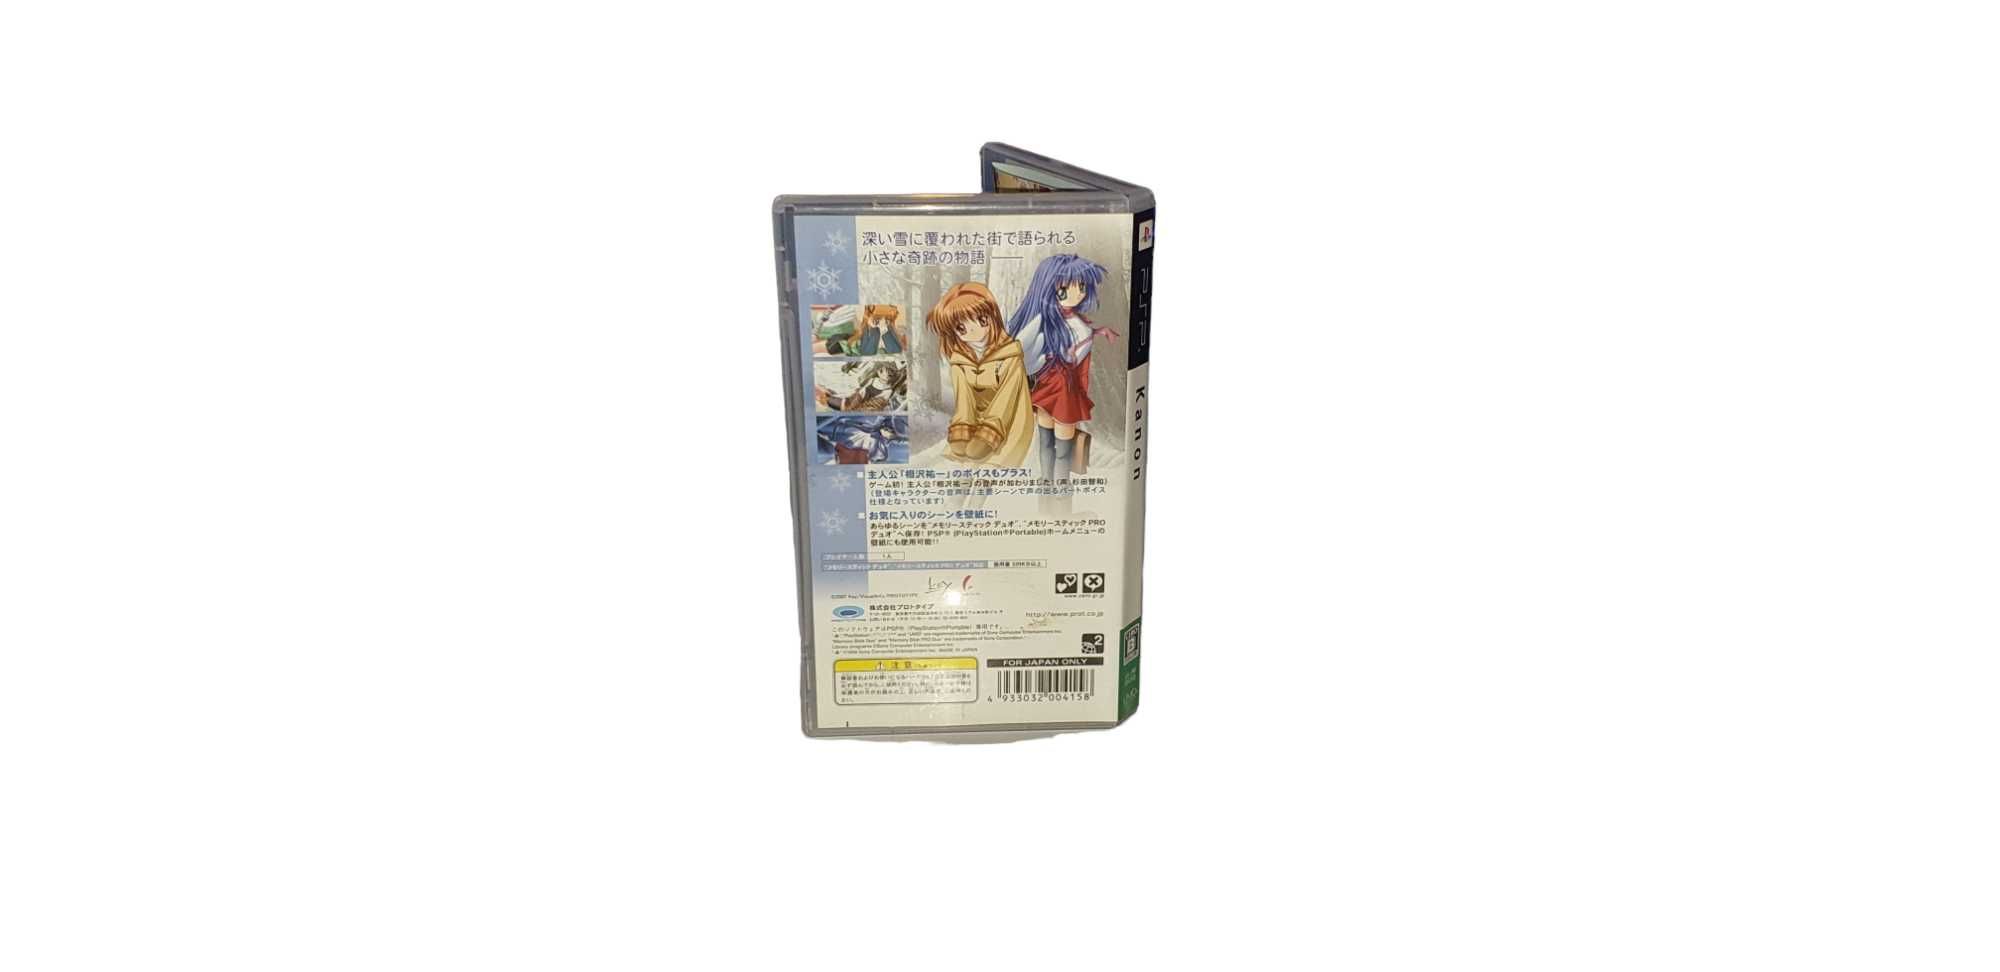 Gry na PSP Anime JRPG Unikaty